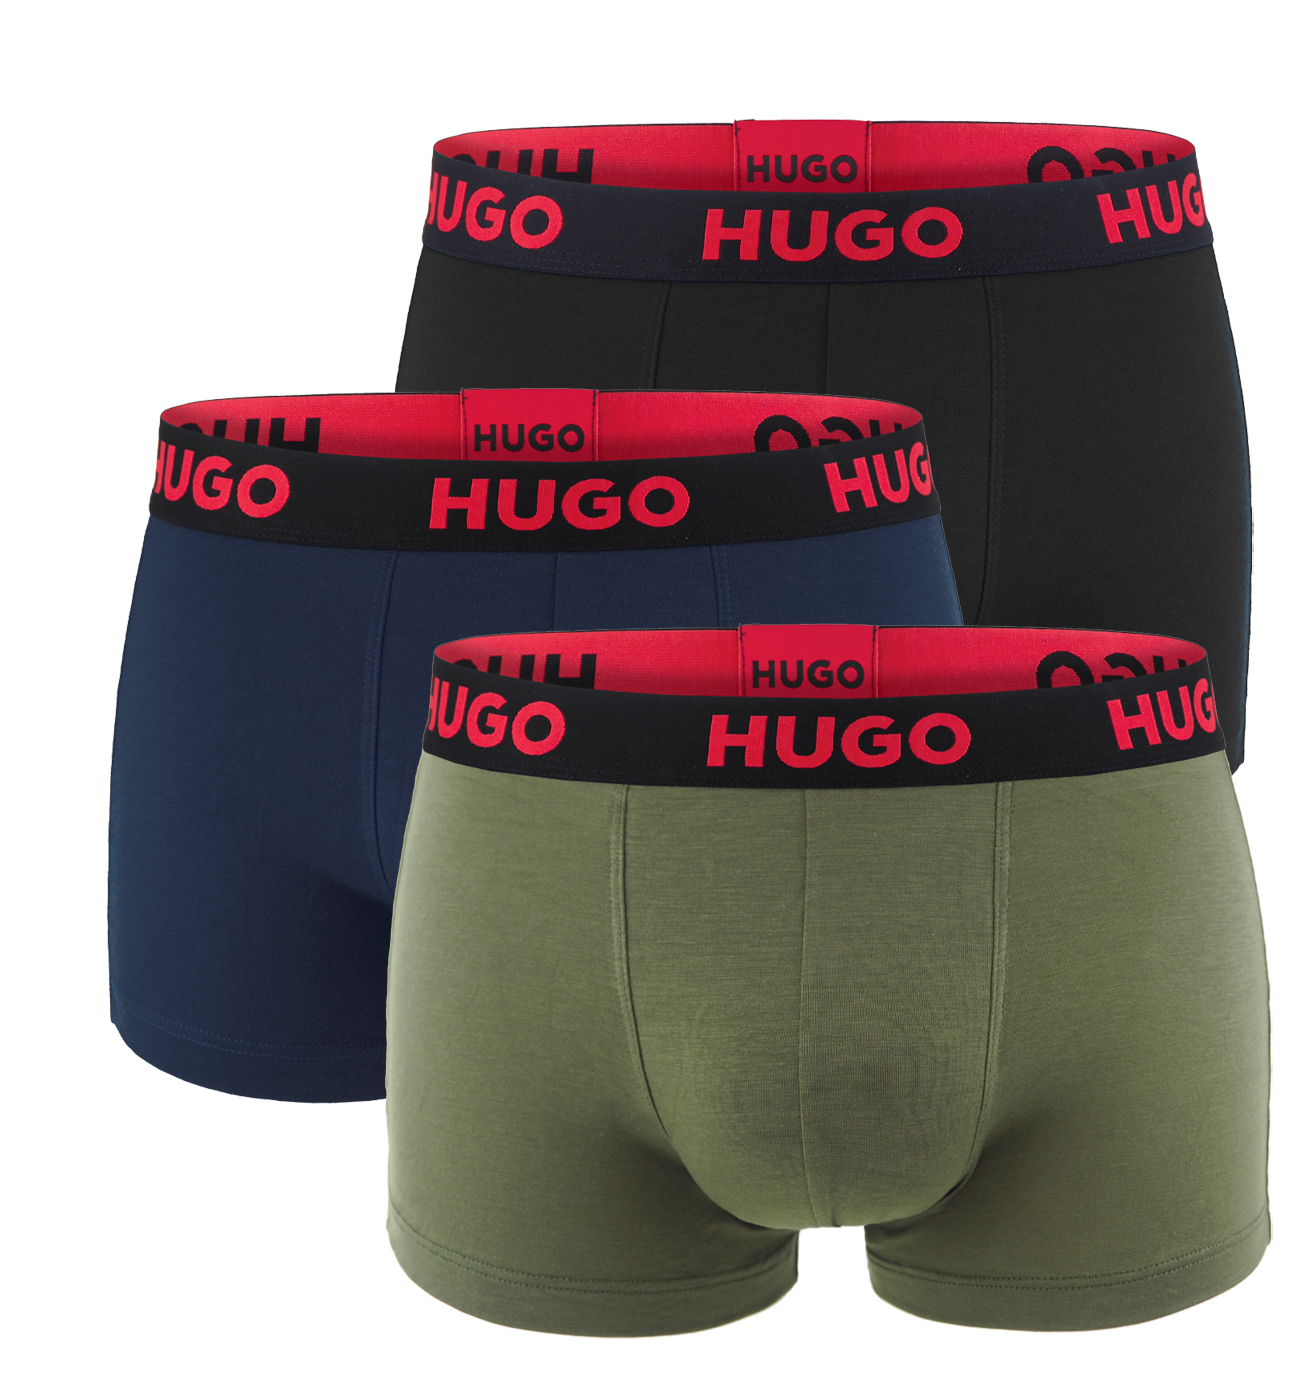 HUGO - boxerky 3PACK lyocell stretch army green & black combo - limitovaná fashion edícia (HUGO BOSS)